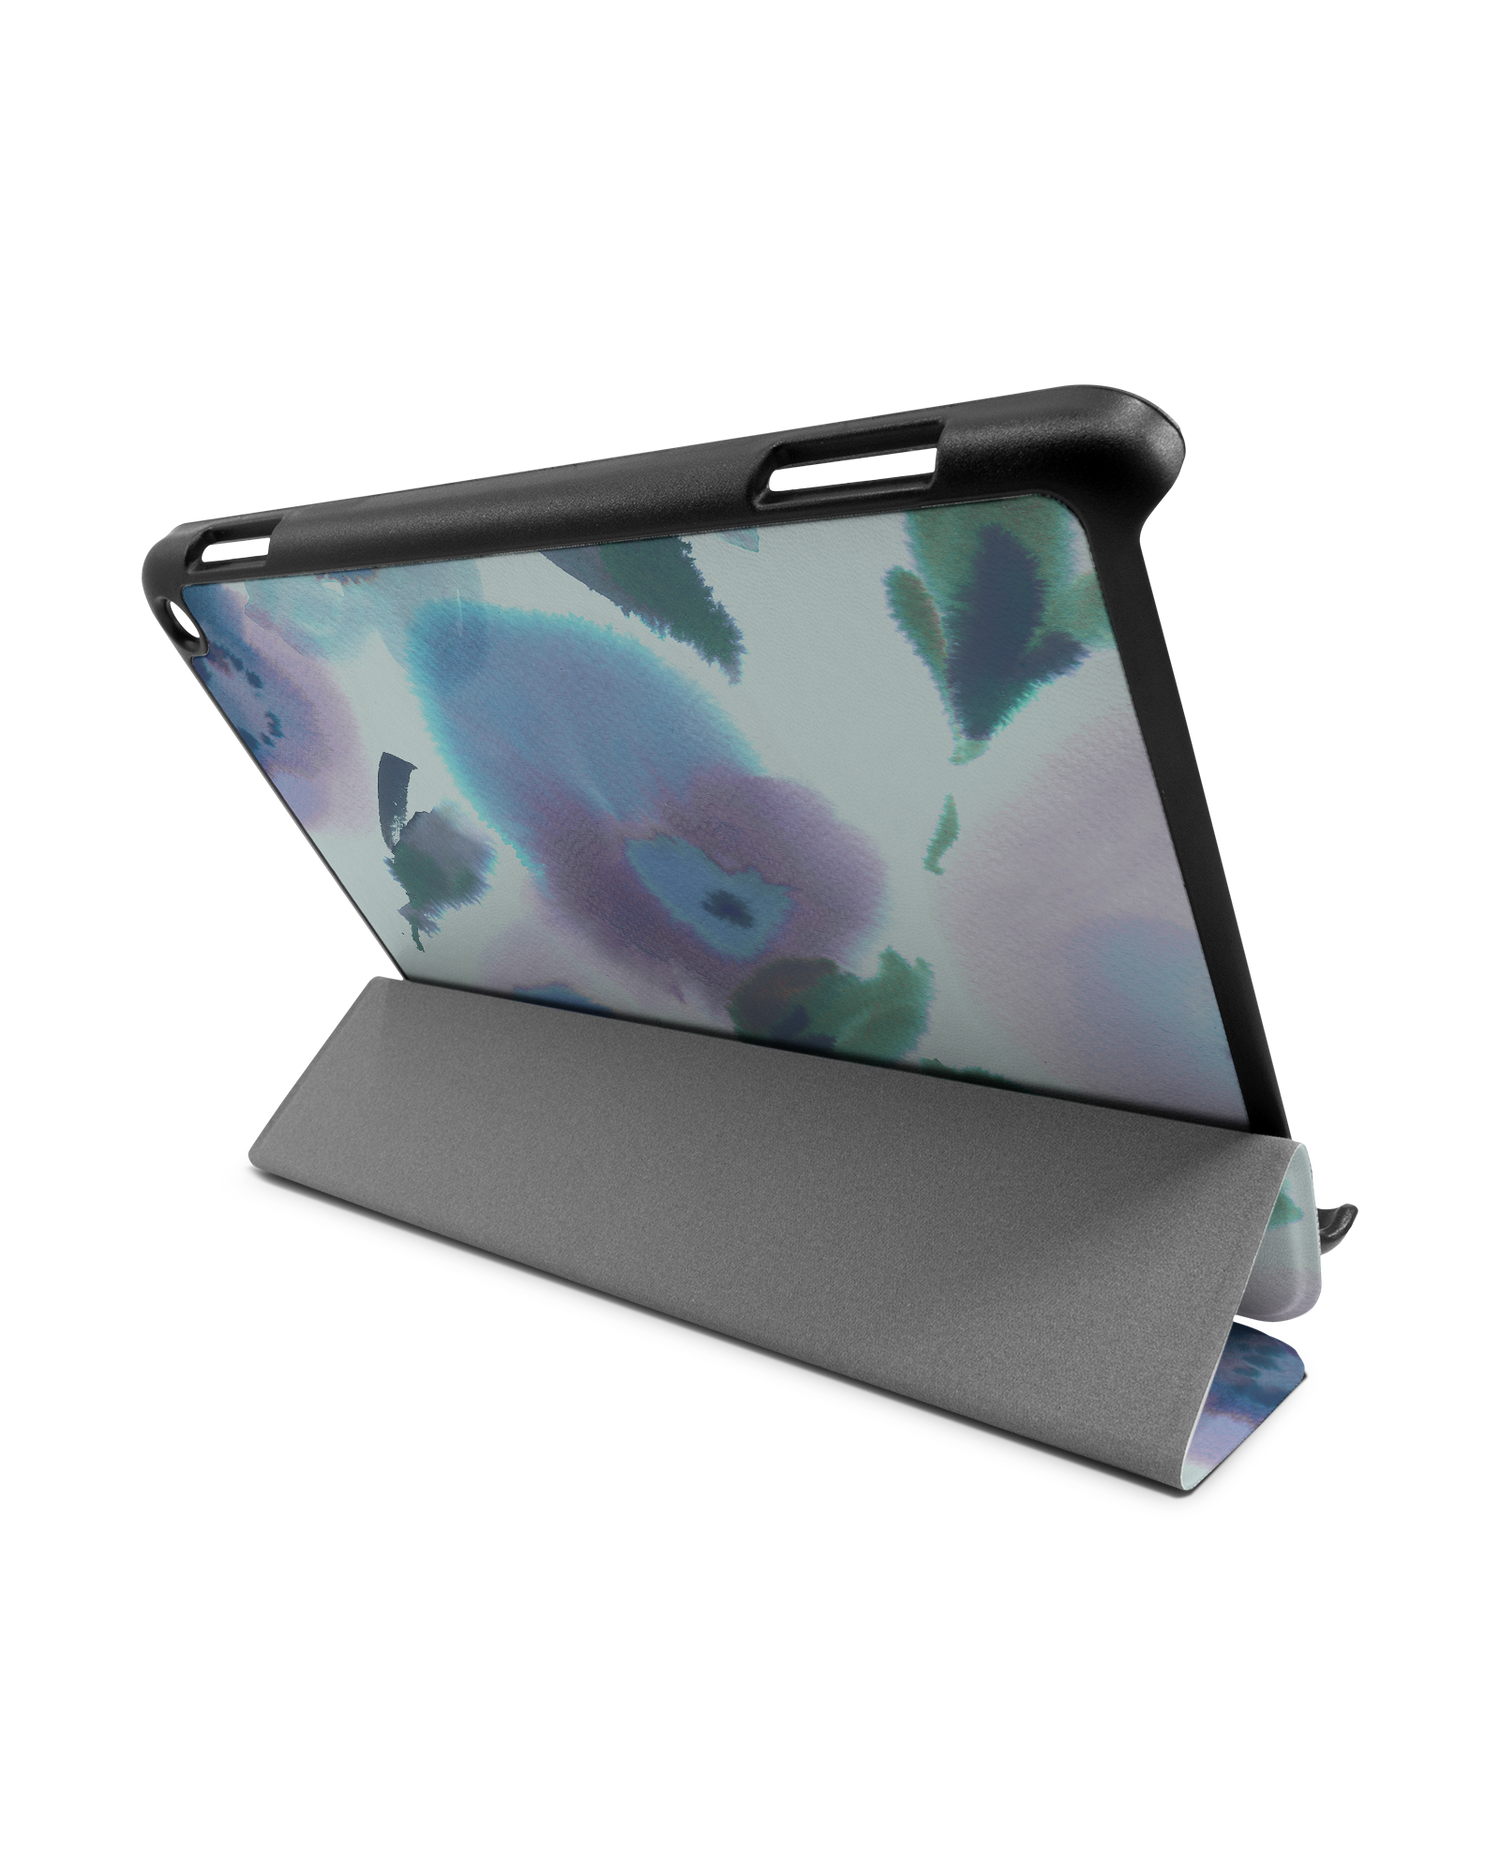 Watercolour Flowers Blue Tablet Smart Case for Amazon Fire HD 8 (2022), Amazon Fire HD 8 Plus (2022), Amazon Fire HD 8 (2020), Amazon Fire HD 8 Plus (2020): Used as Stand